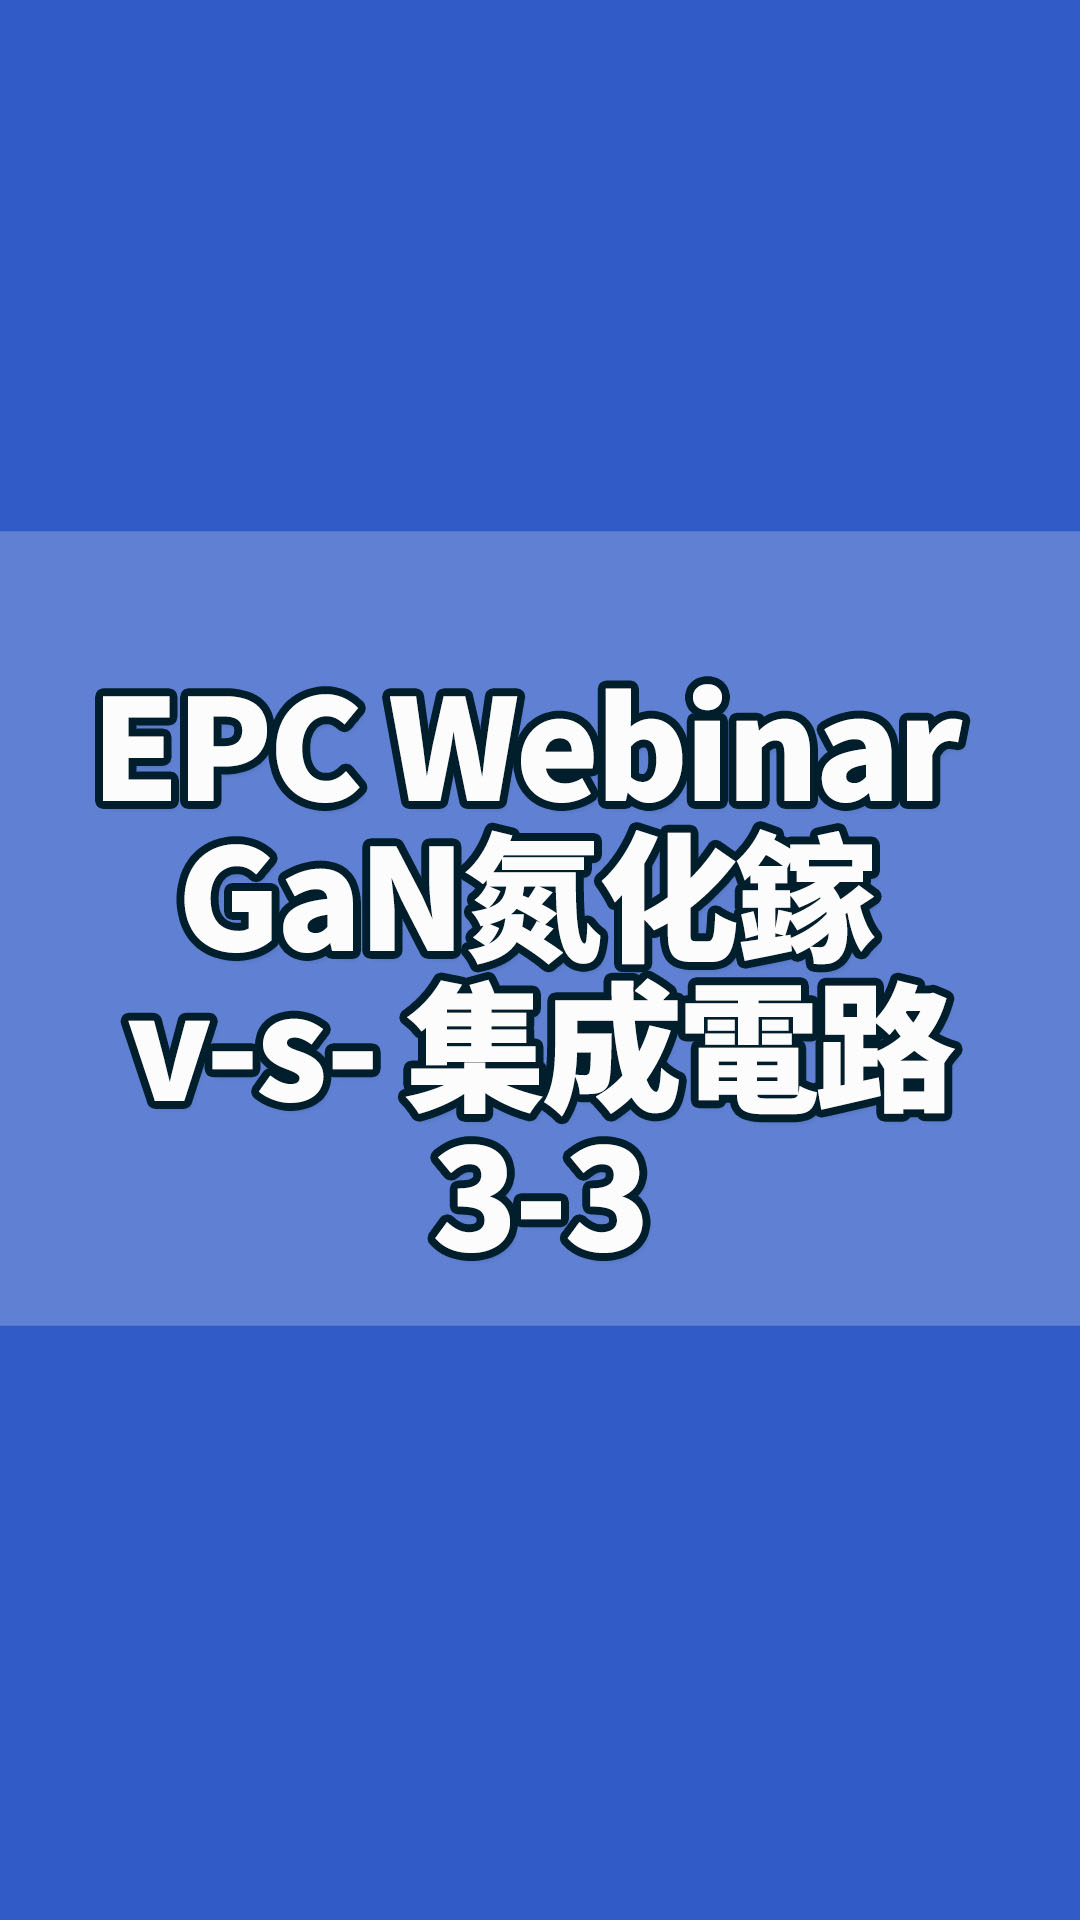 EPC Webinar GaN氮化鎵 v.s 集成電路3-3.mp4